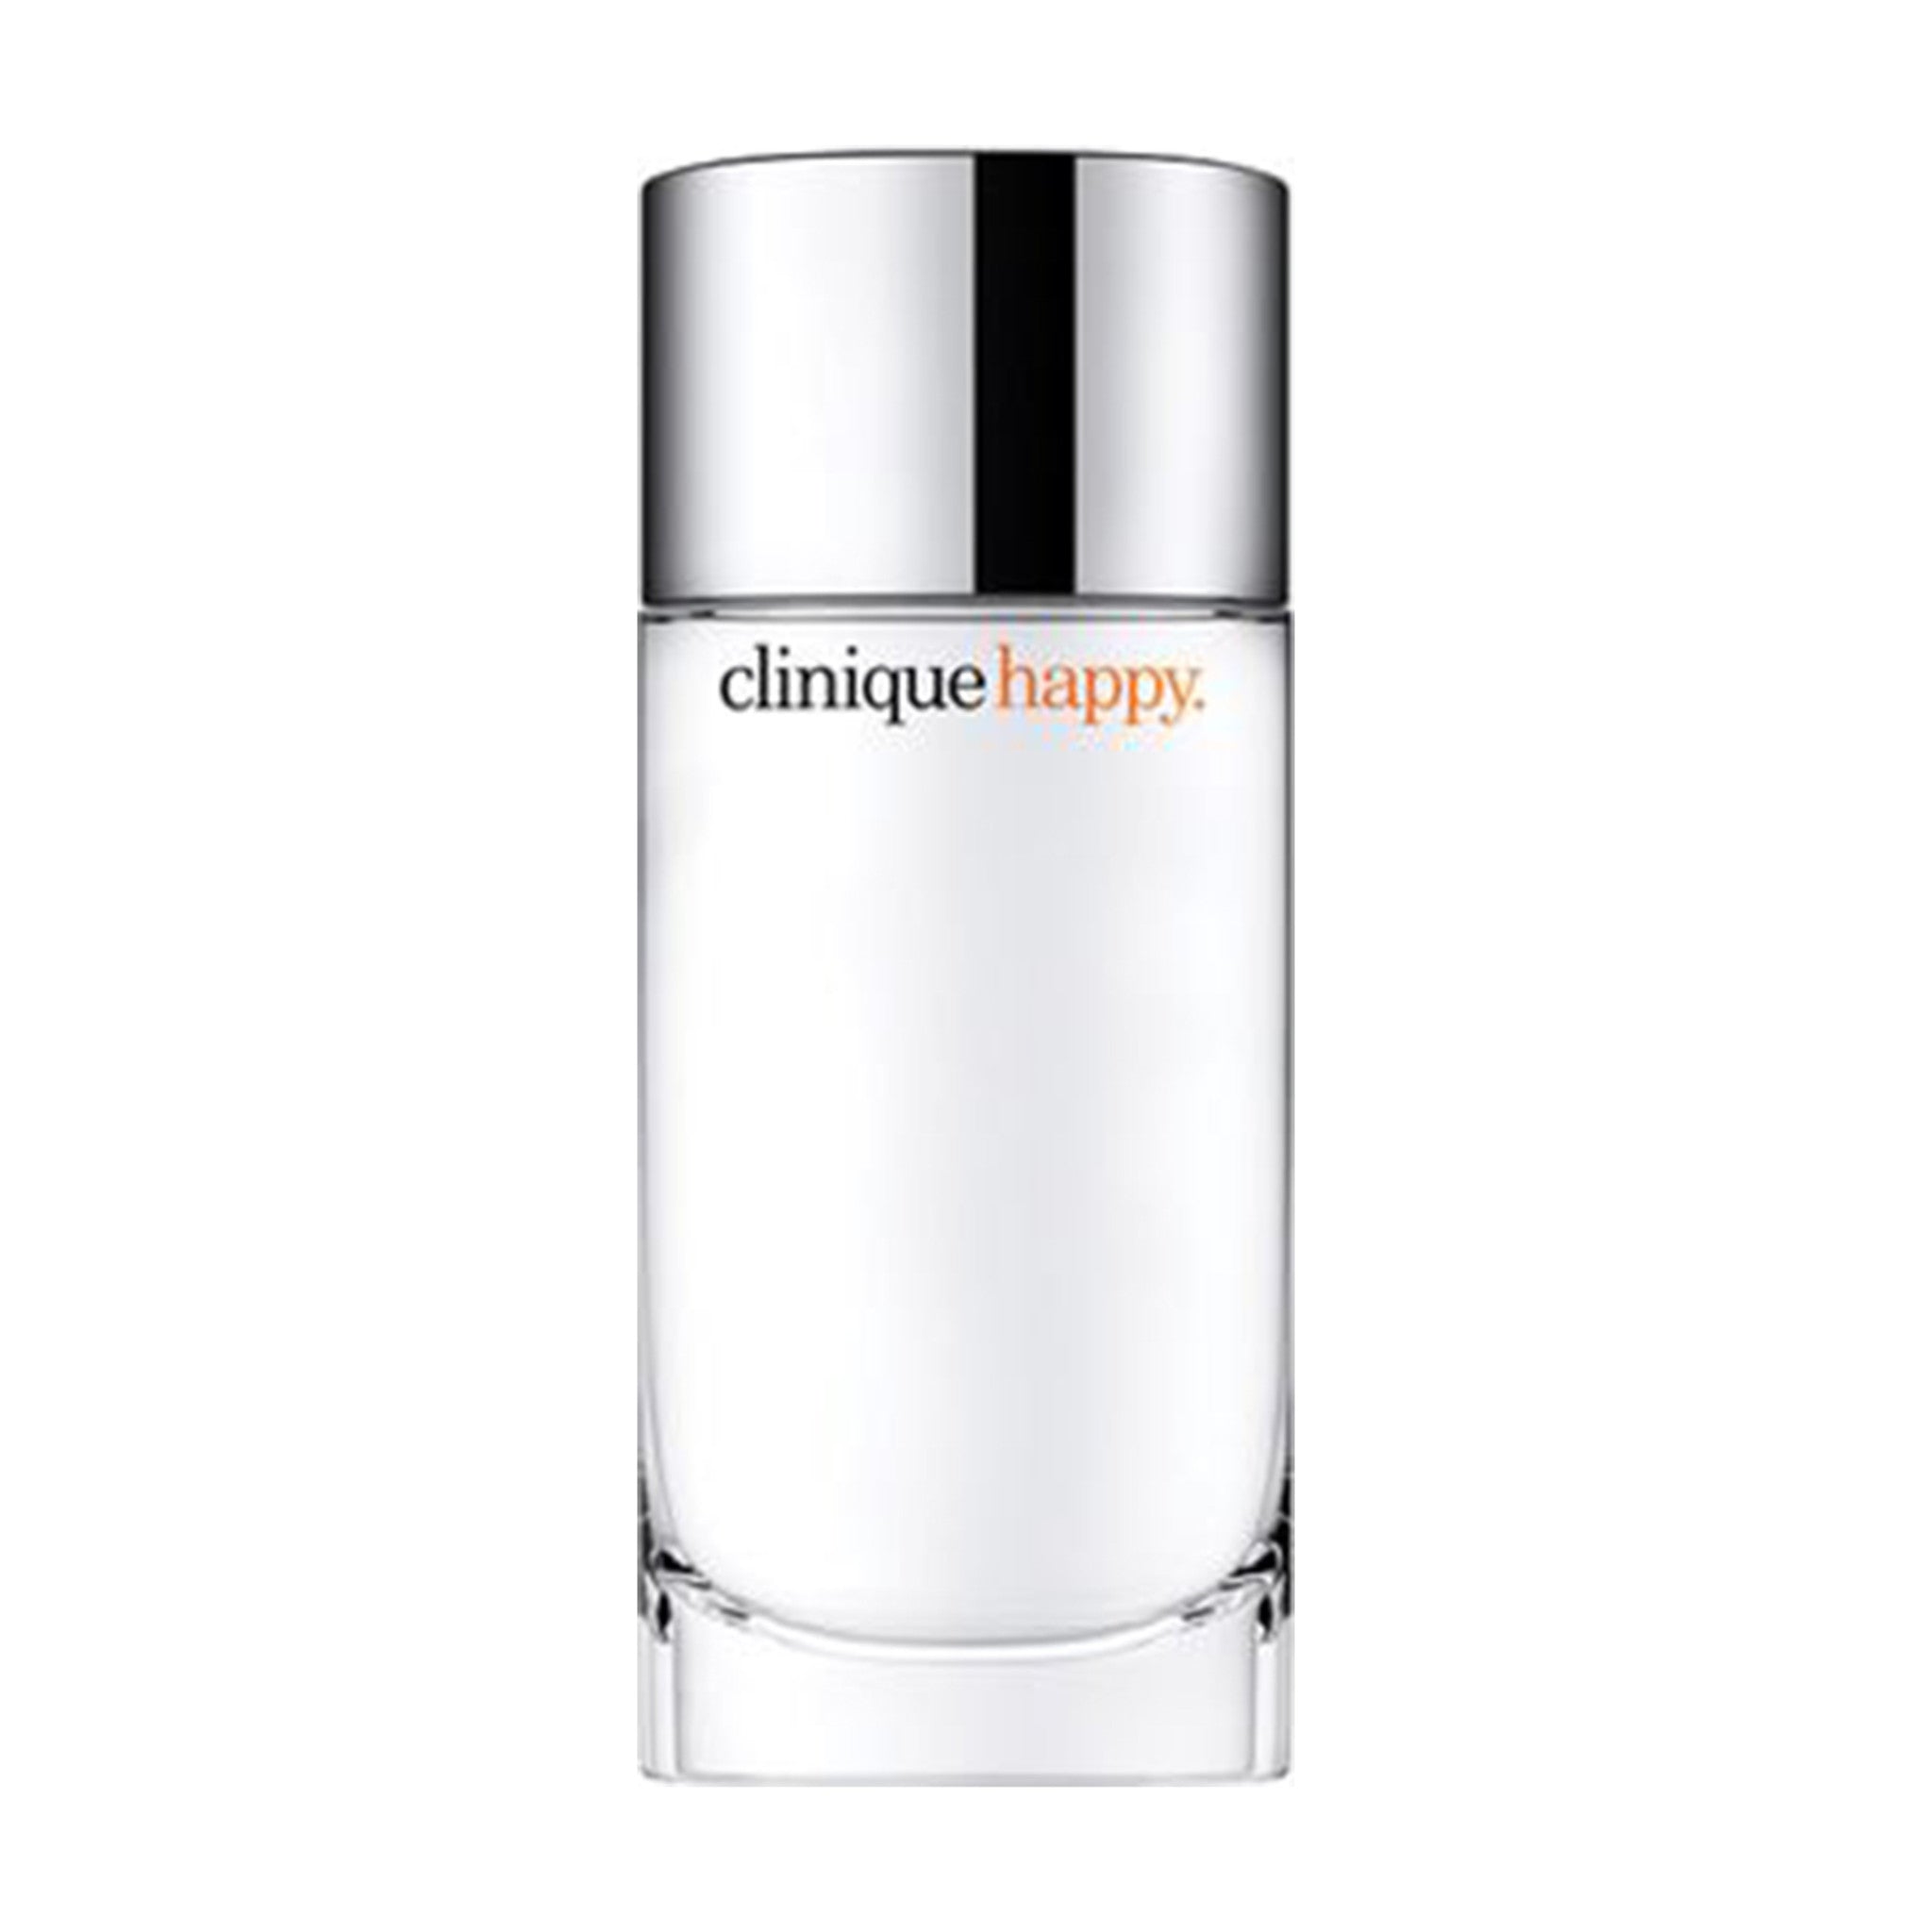 Clinique Happy Perfume Spray Size variant: 1.7 OZ main image.